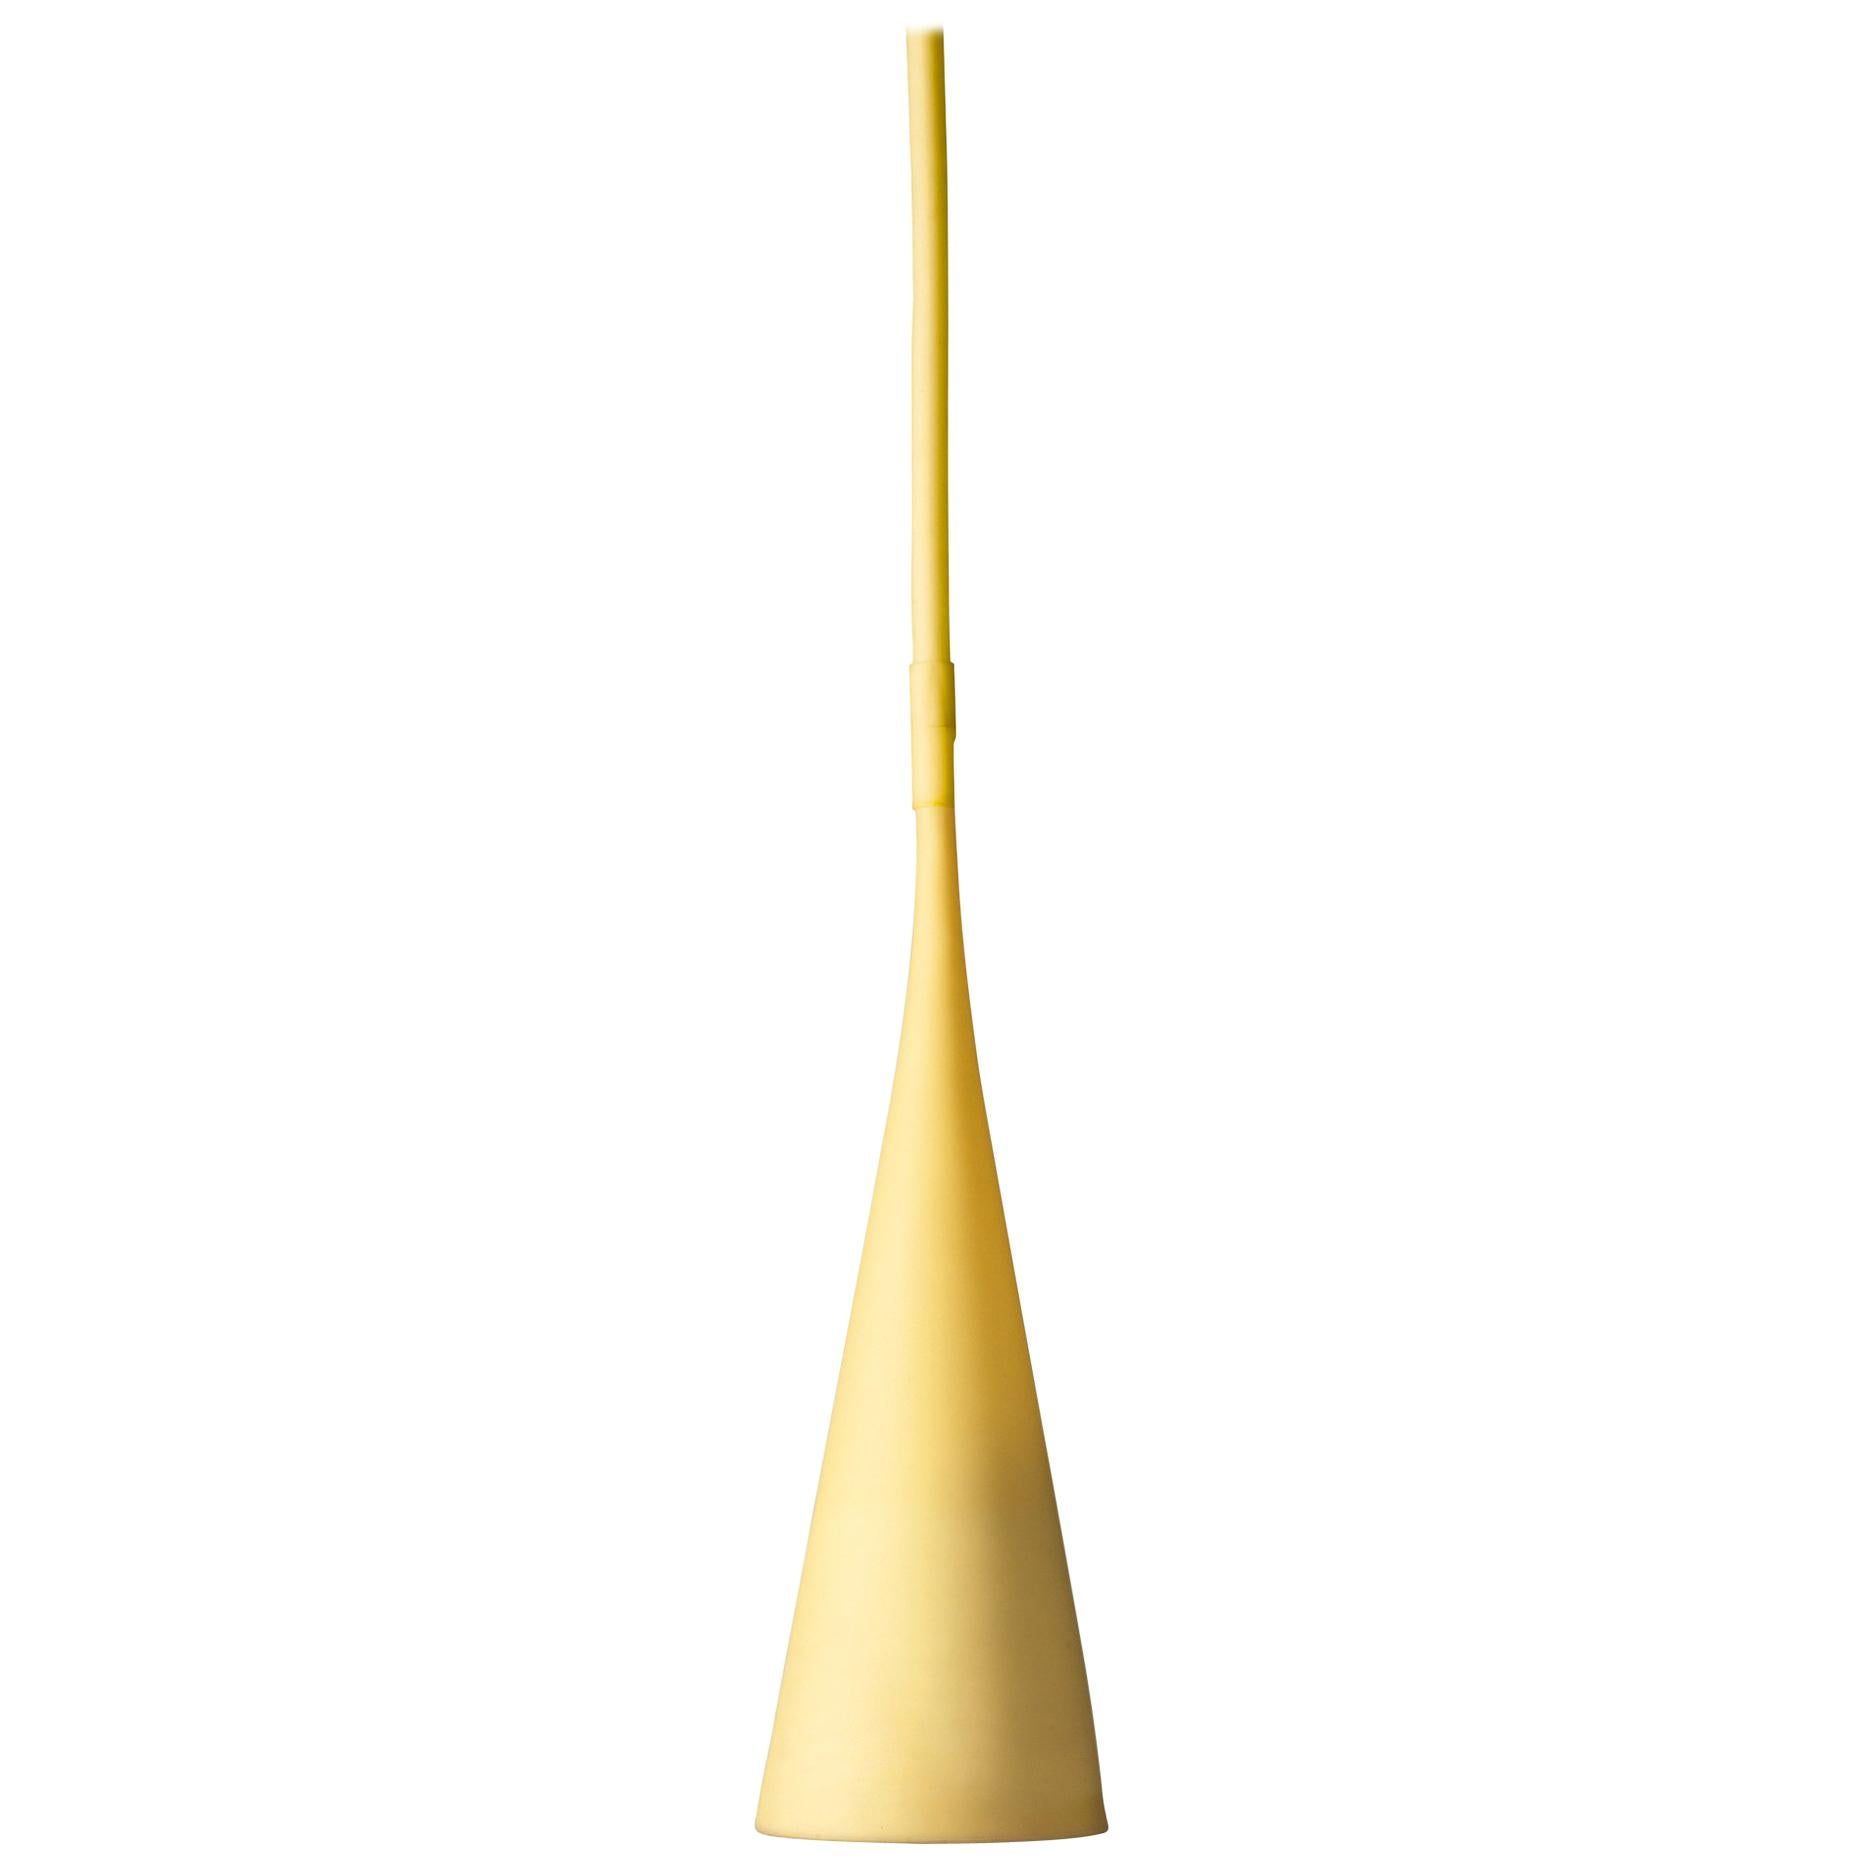 Foscarini UTO Suspension/Table Lamp in Yellow by Lagranja Design For Sale